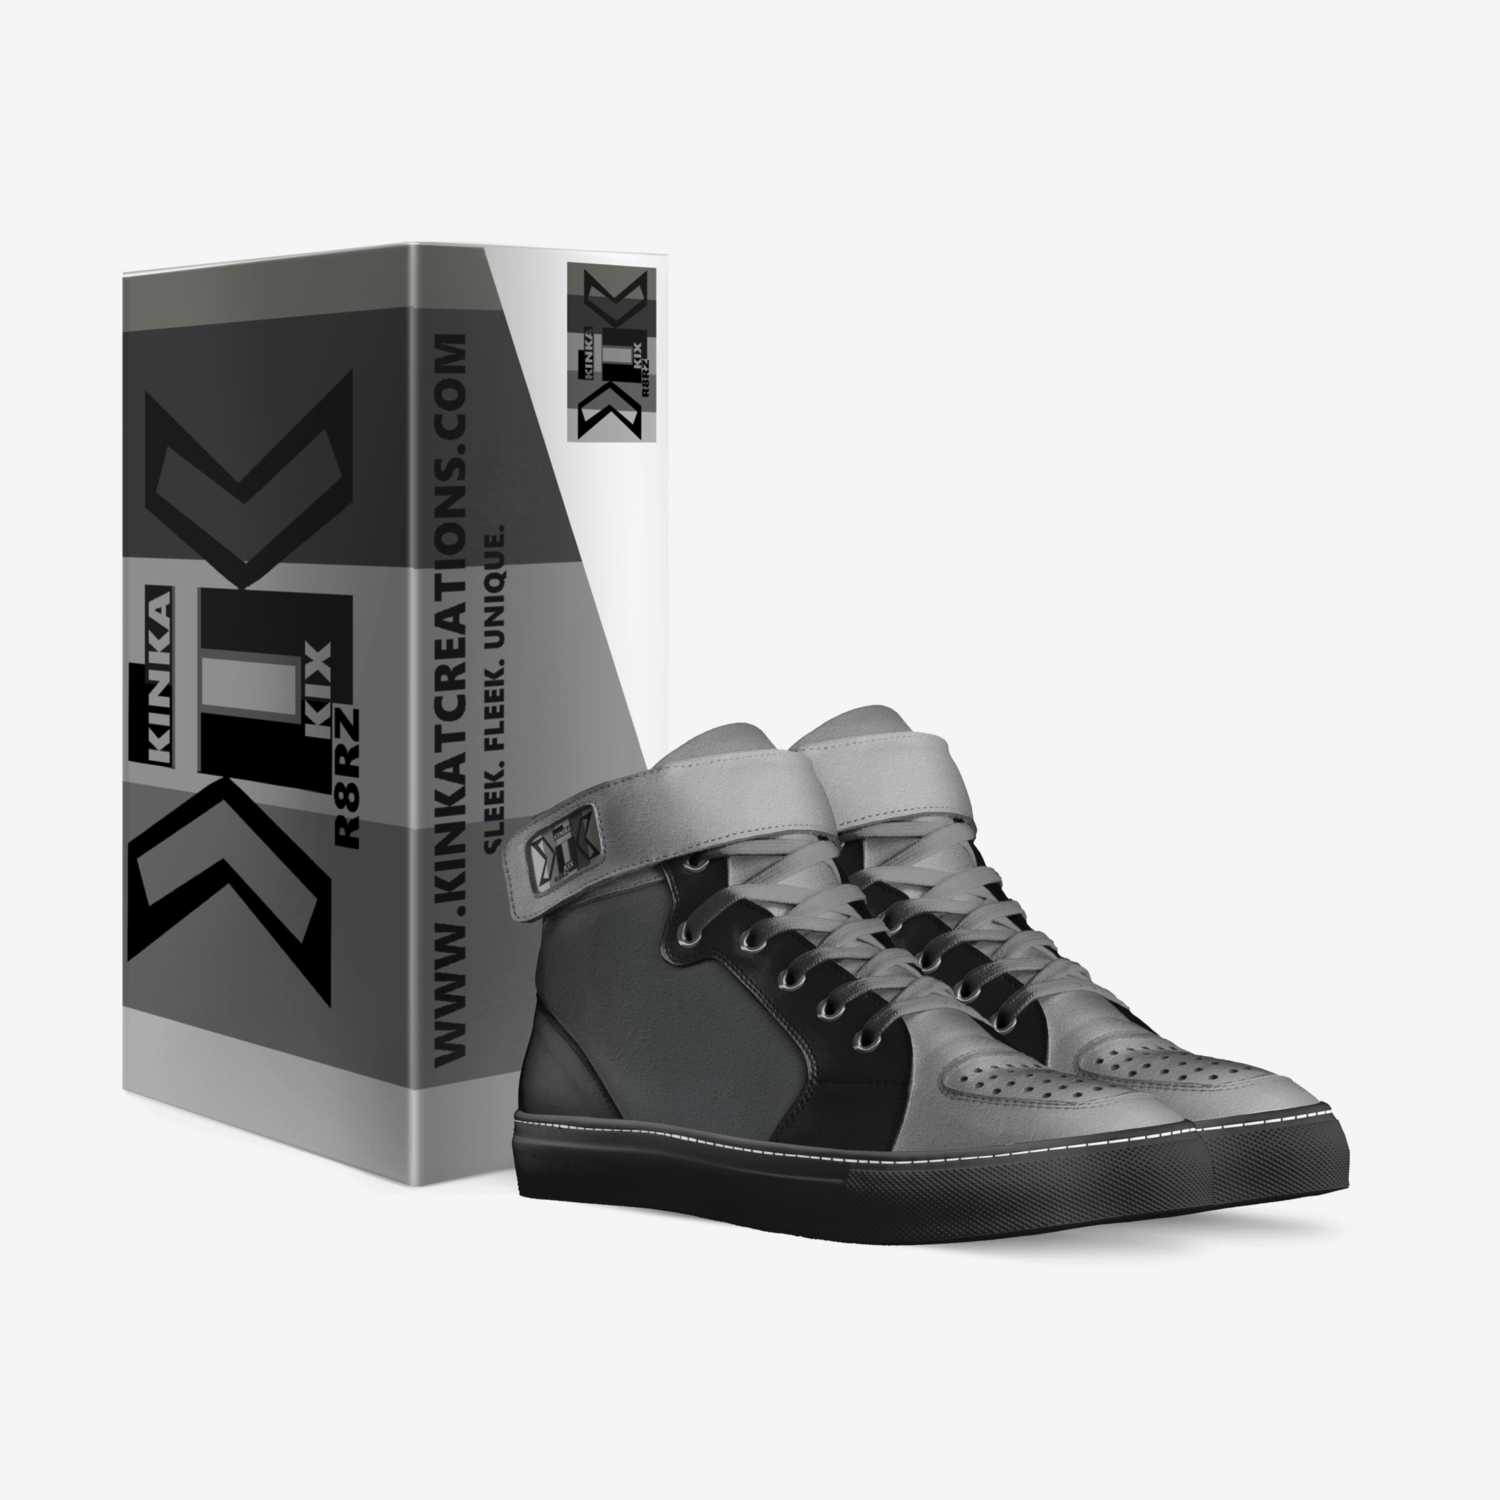 R8RZ custom made in Italy shoes by Kinka T Kix | Box view